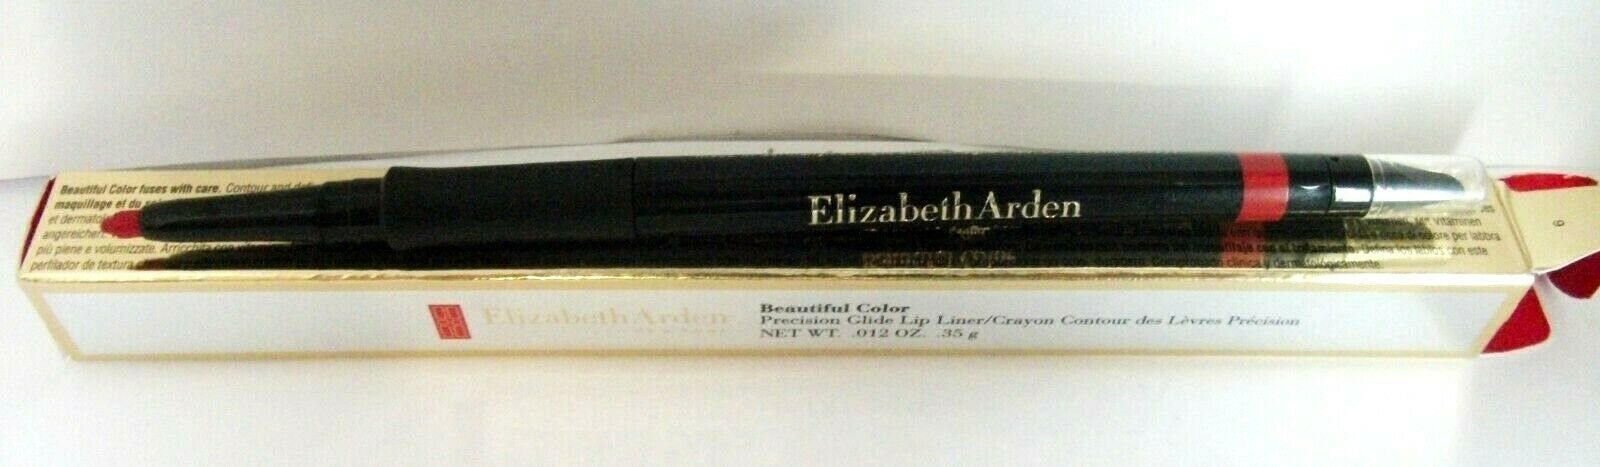 Elizabeth Arden Beautiful Color Precision Glide Lip Liner .012 OZ New